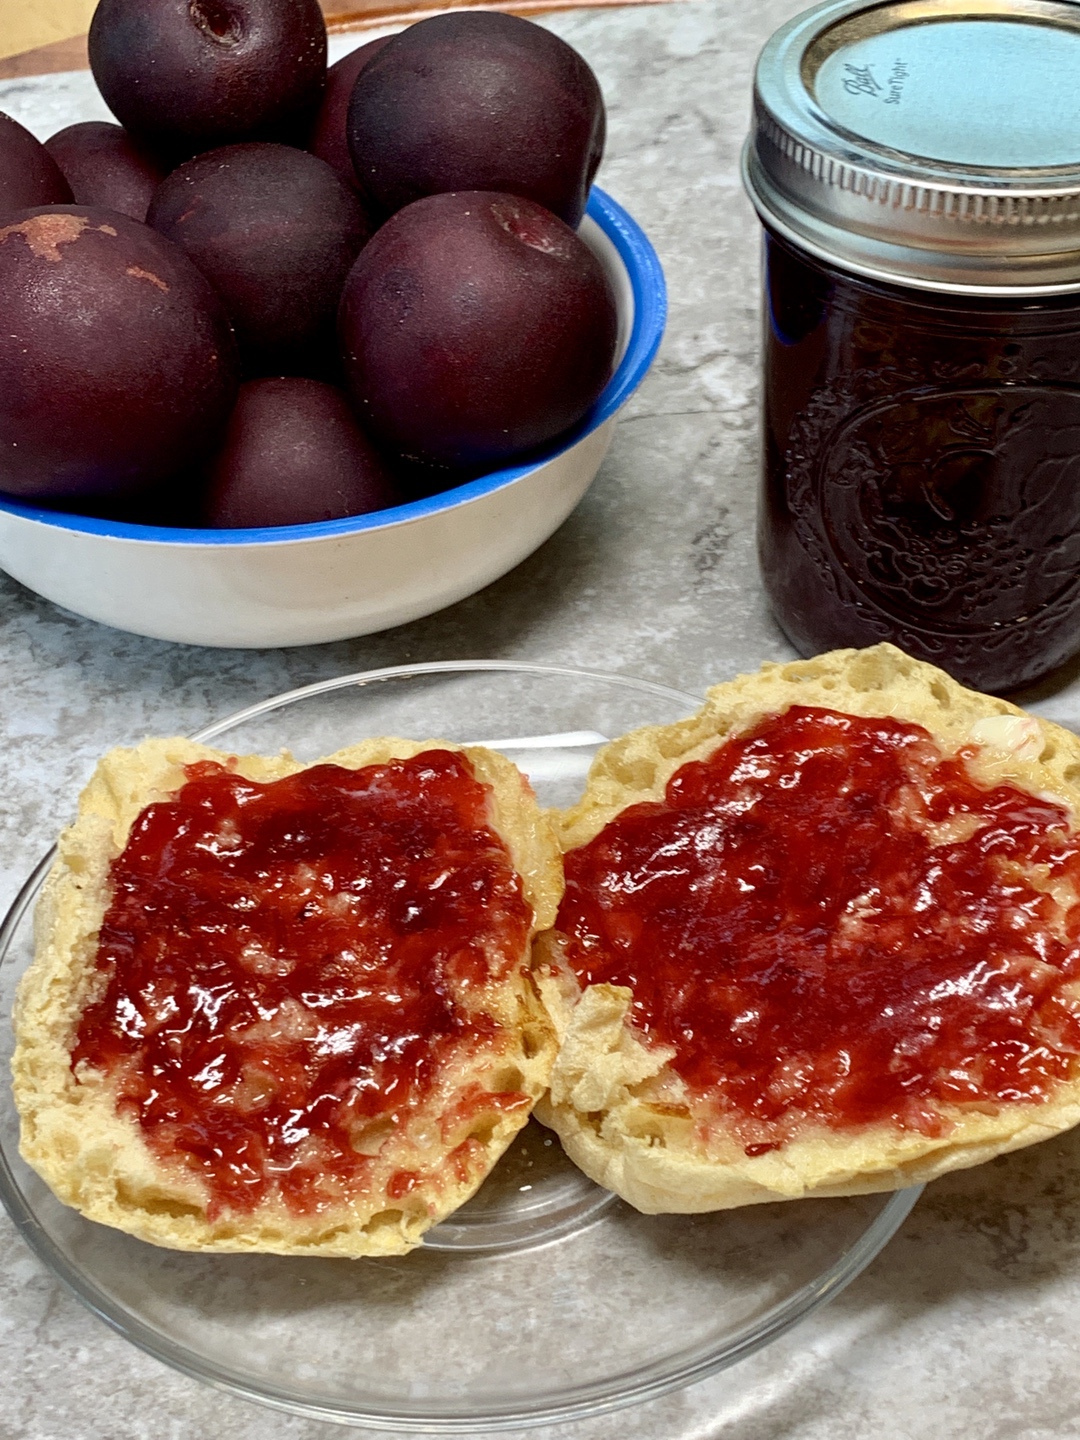 Plums, Jar of plum jam, muffins with plum jam